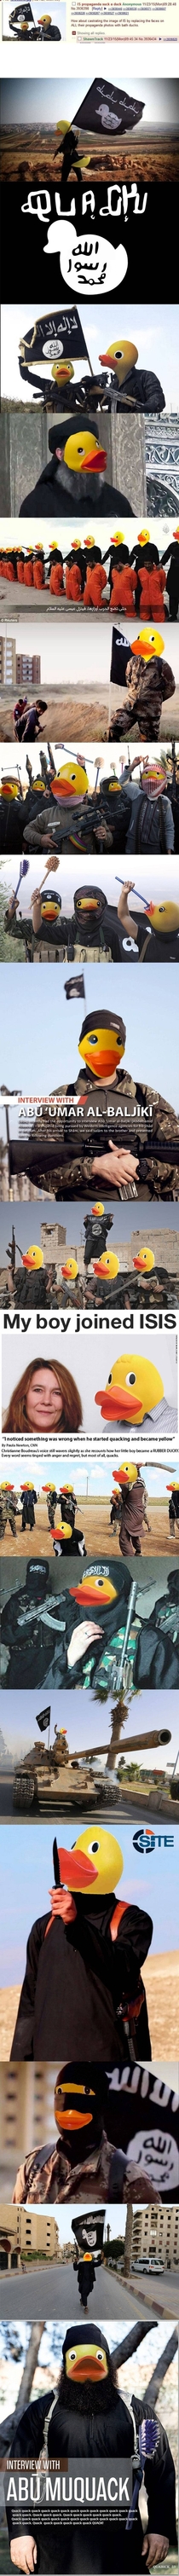 chan Photoshops terrorists into rubber ducks